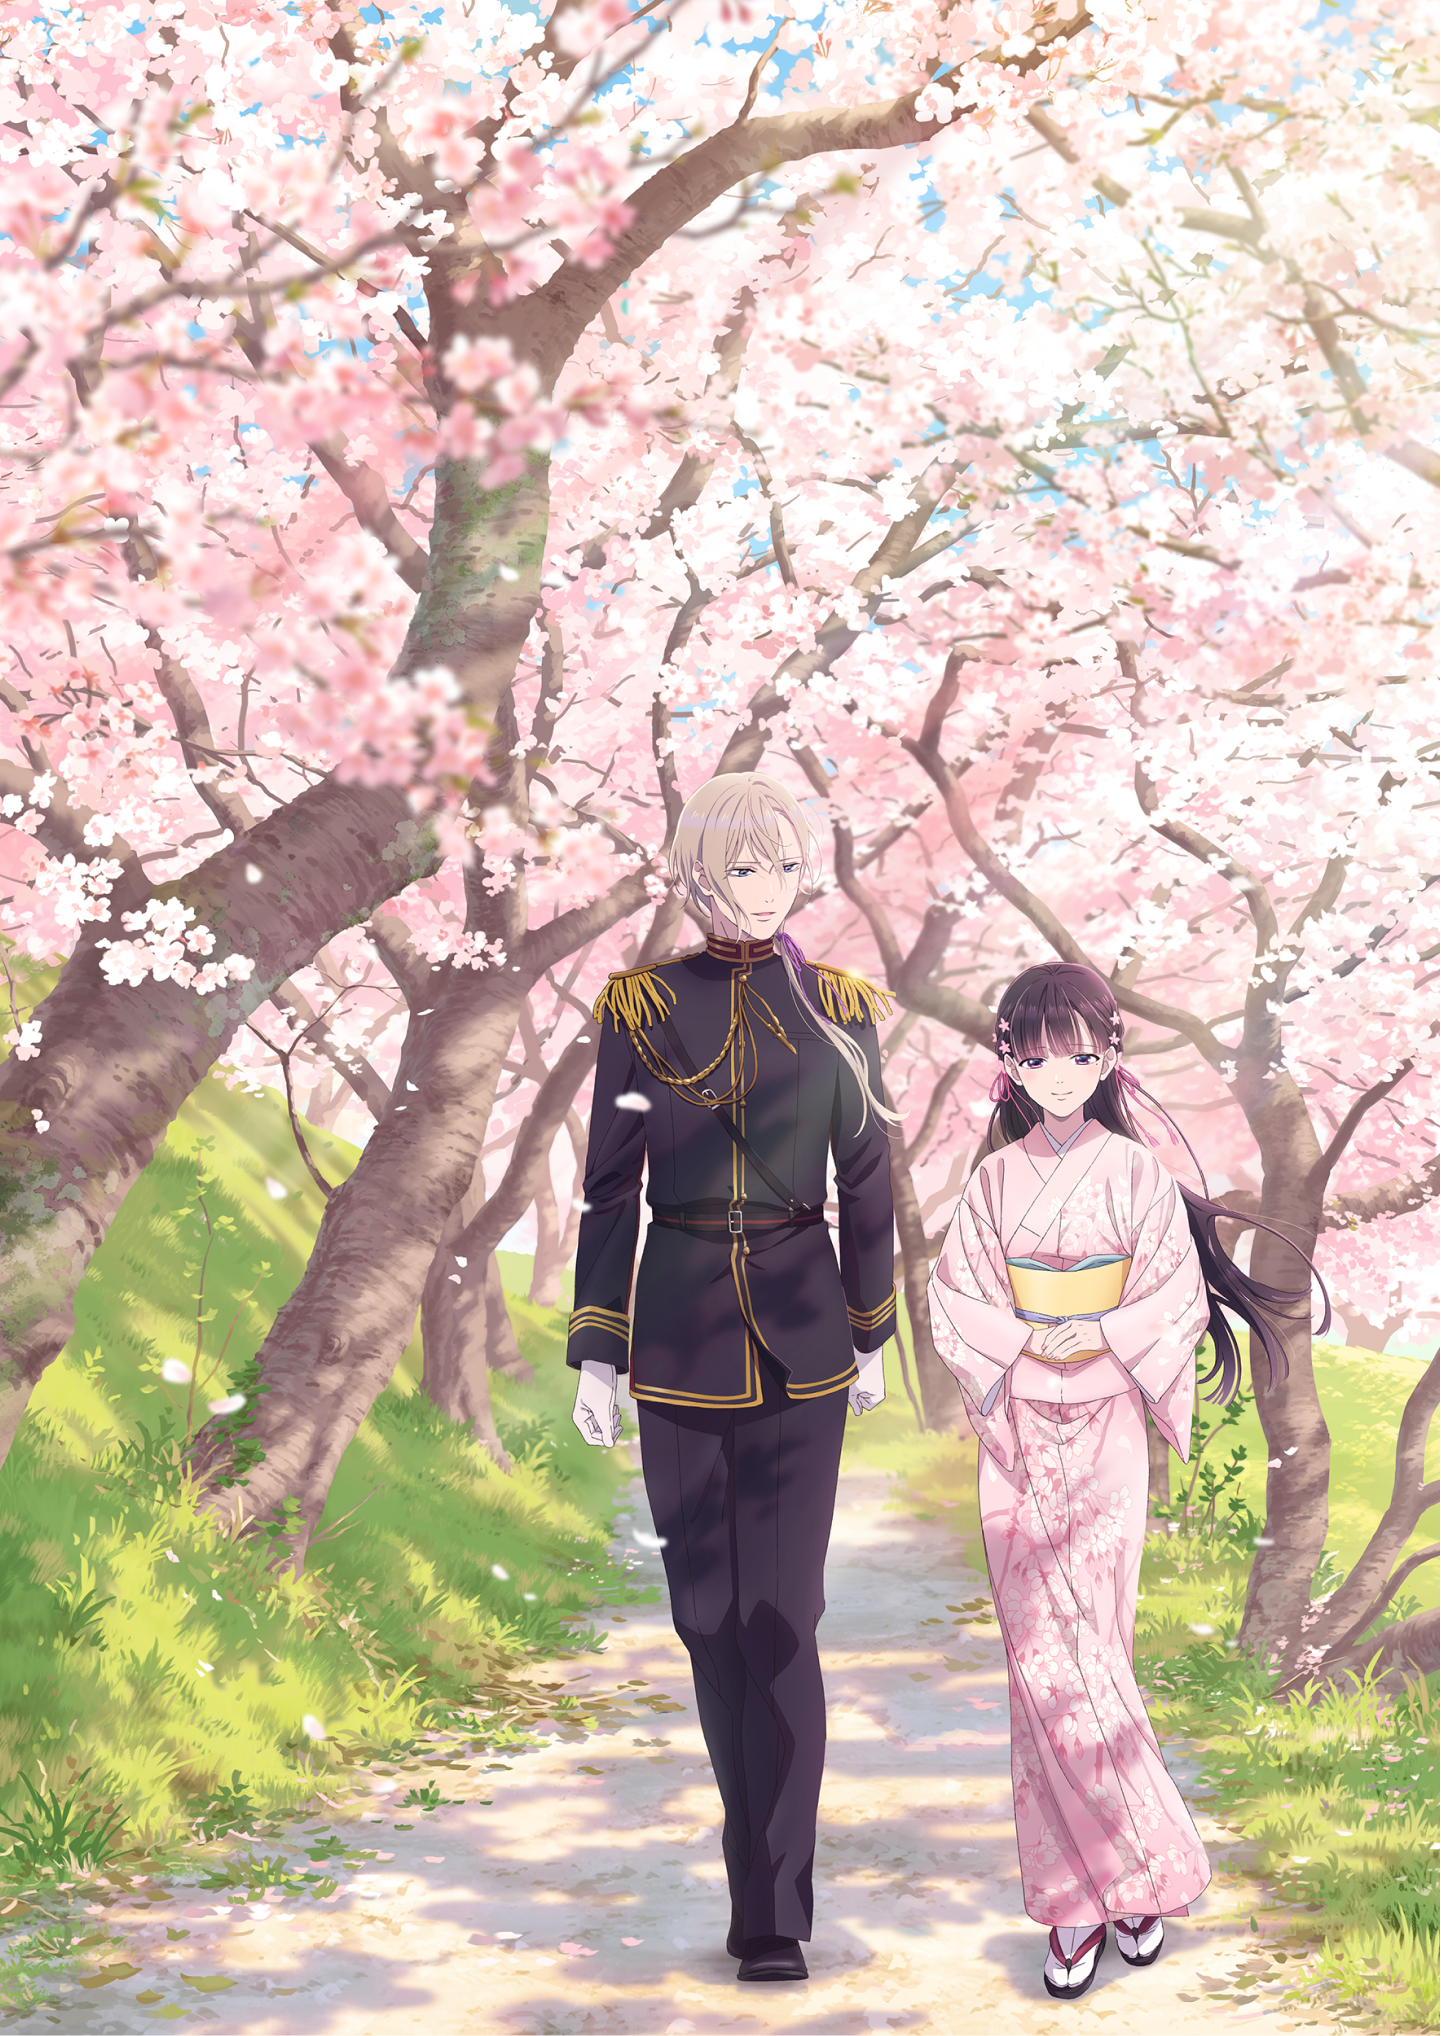 Watashi no Shiawase na Kekkon (My Happy Marriage) Anime Image Board